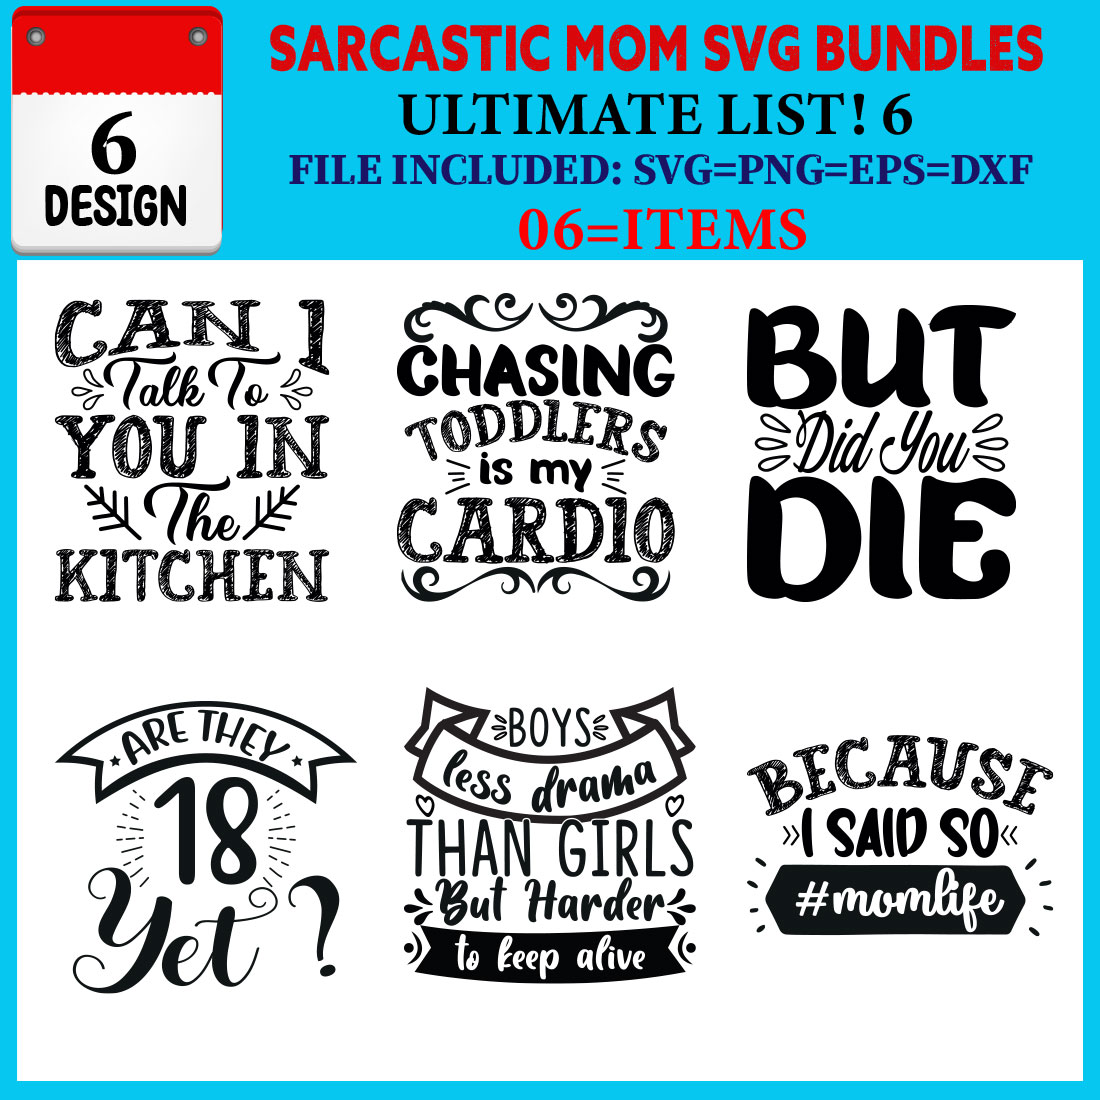 Sarcastic Mom T-shirt Design Bundle Vol-01 cover image.